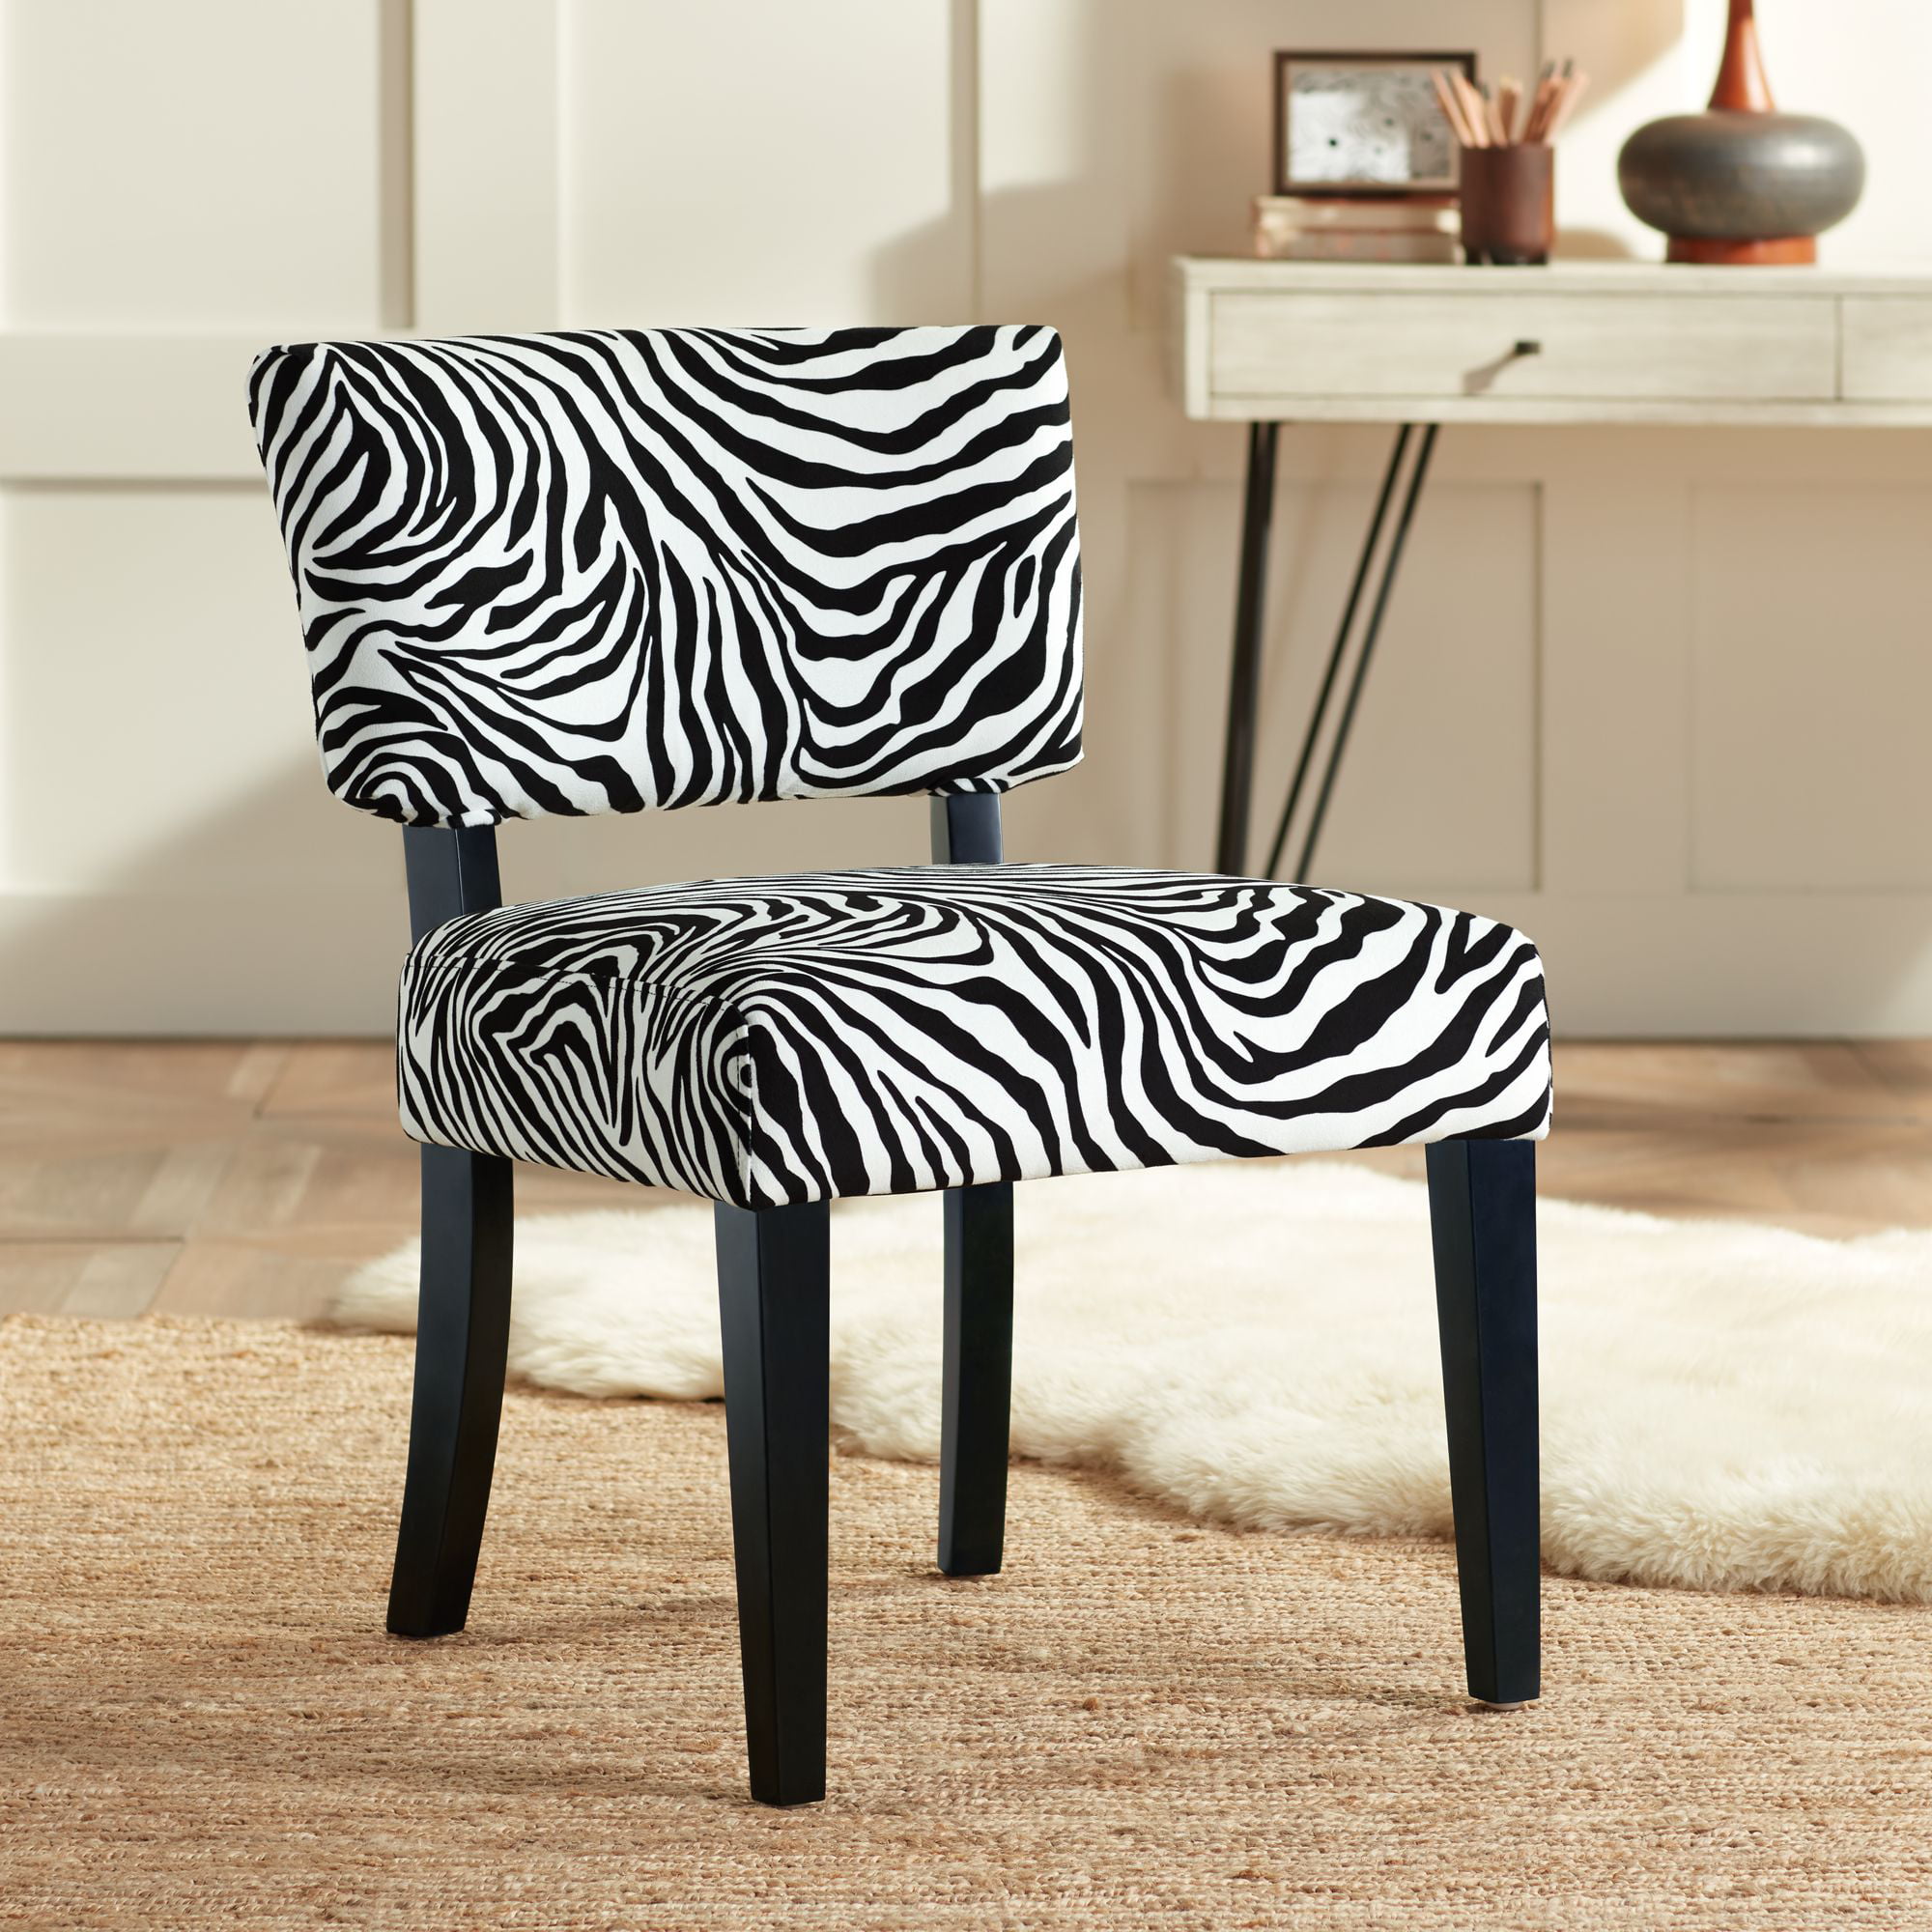 Studio 55d Zambia Zebra Print Accent Chair With Velvet Fabric Walmartcom Walmartcom